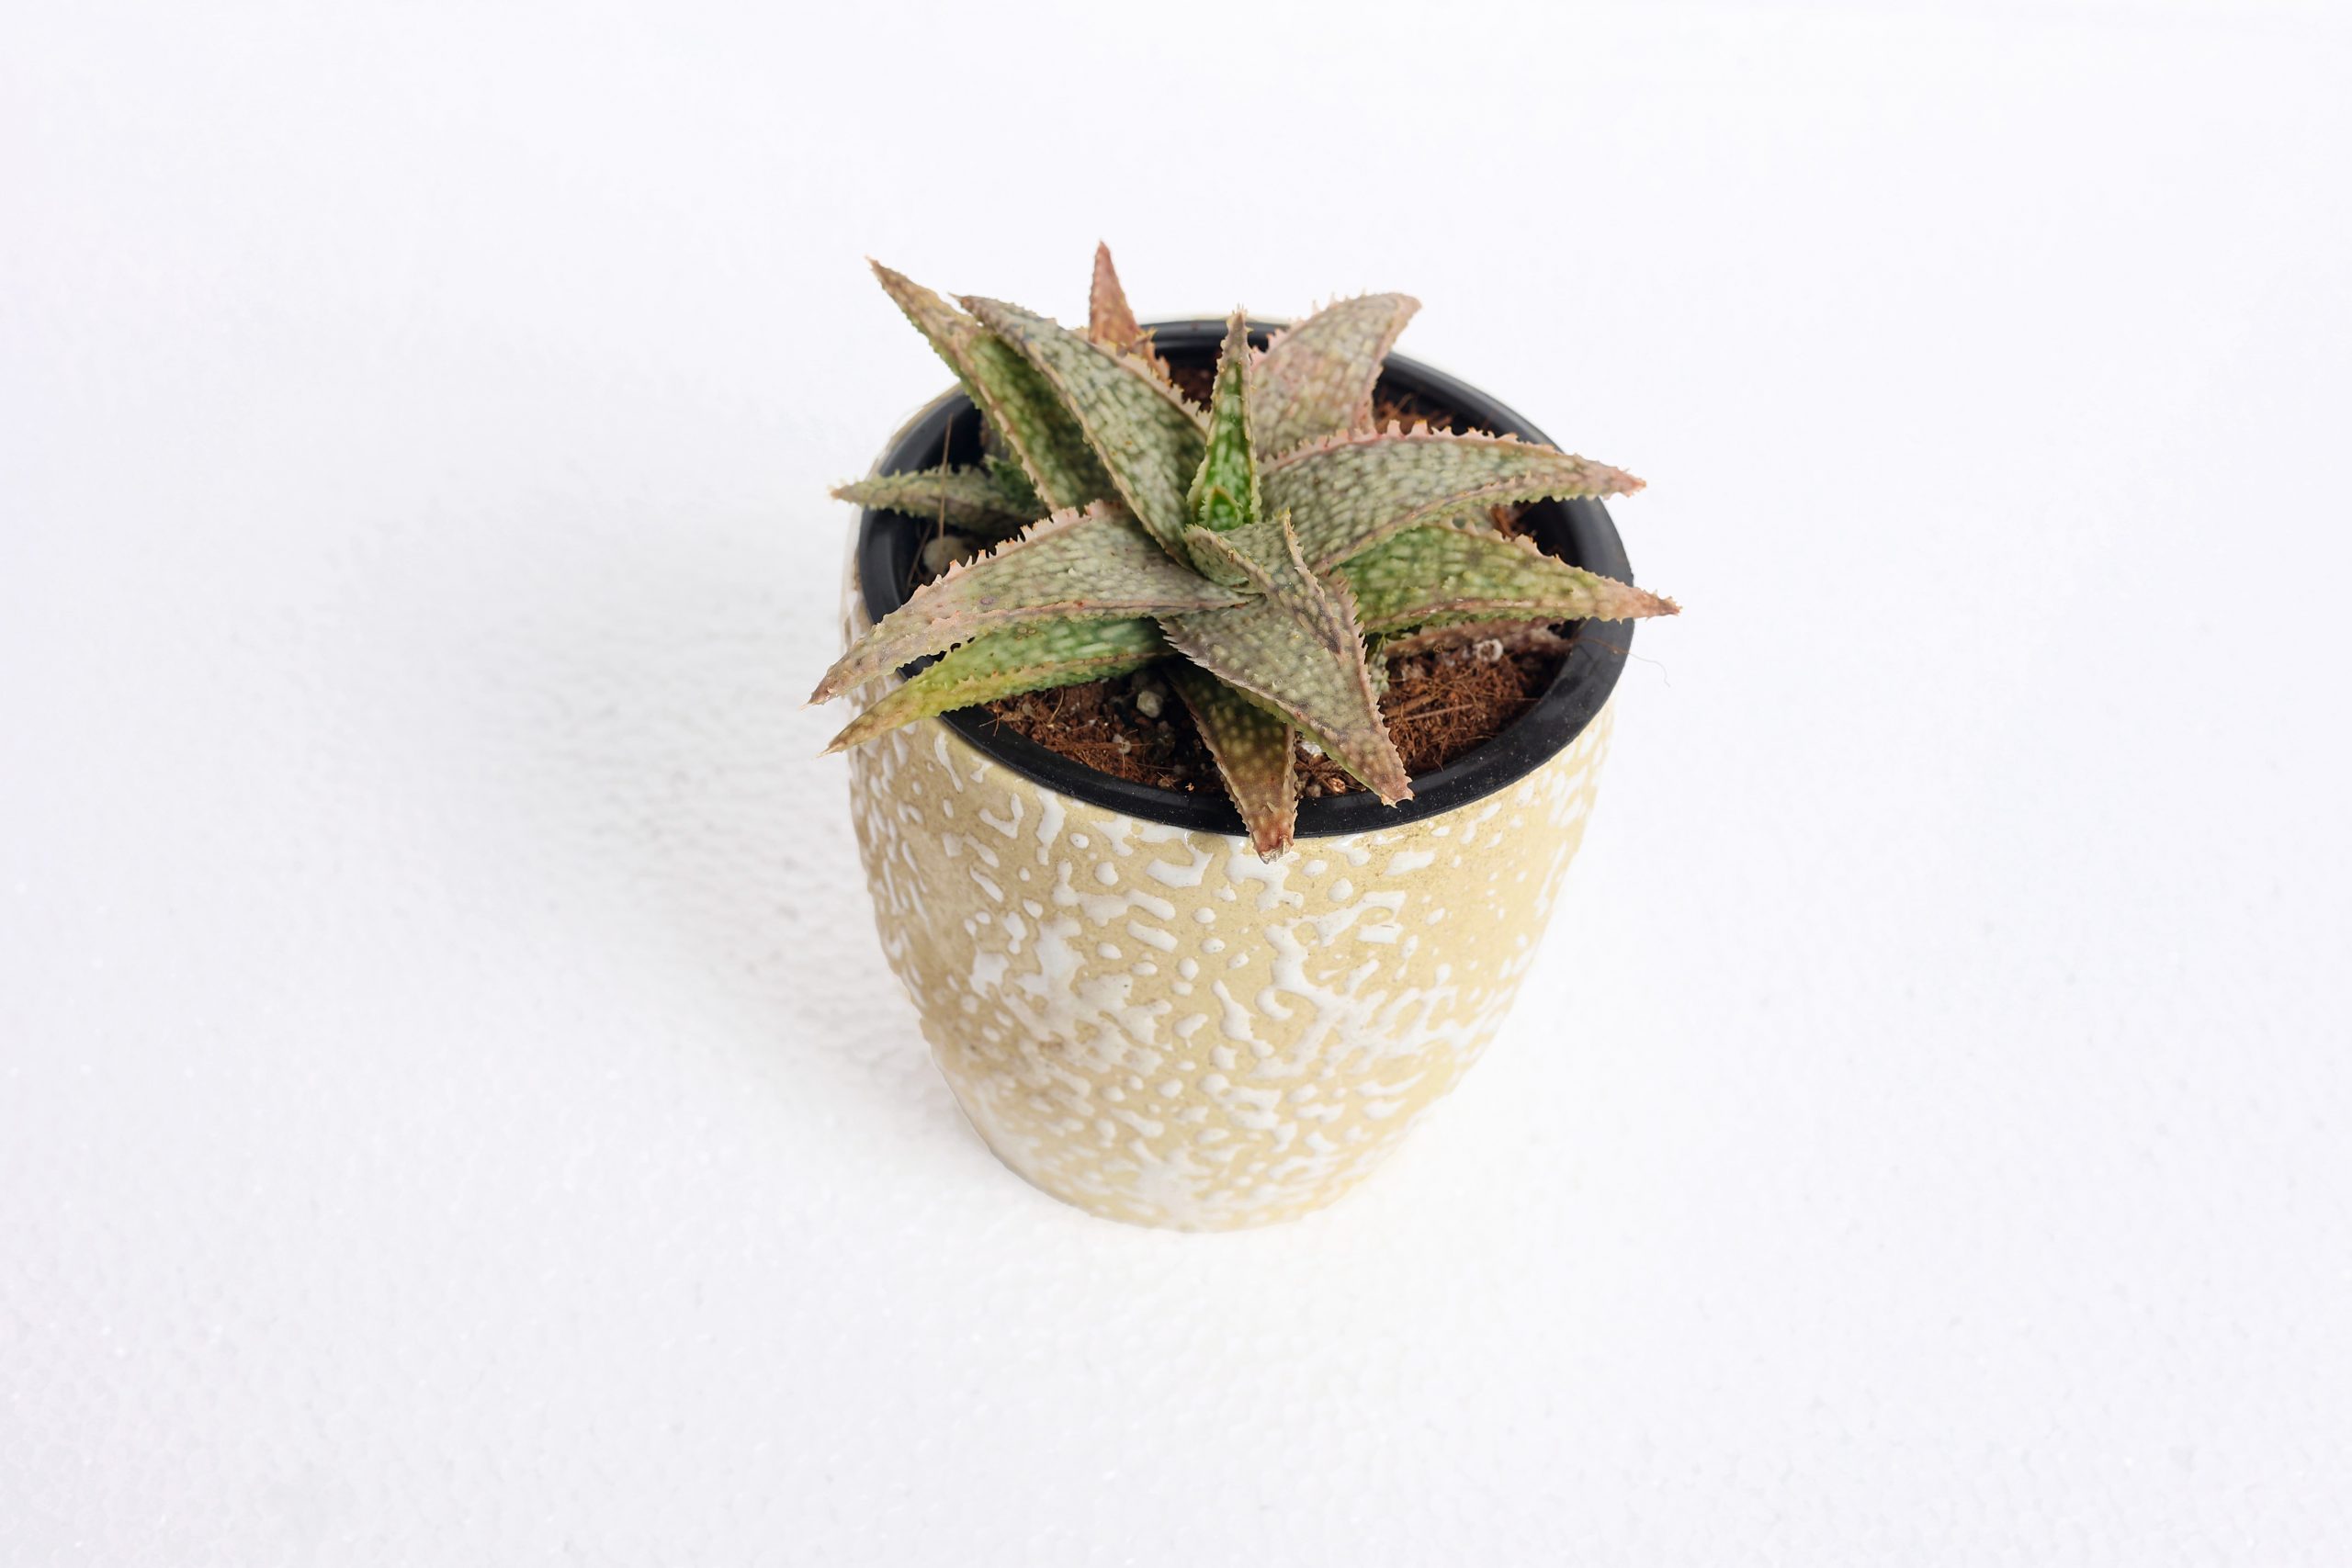 Aloe HYBRID succulent gifting desk plant in ceramic pot